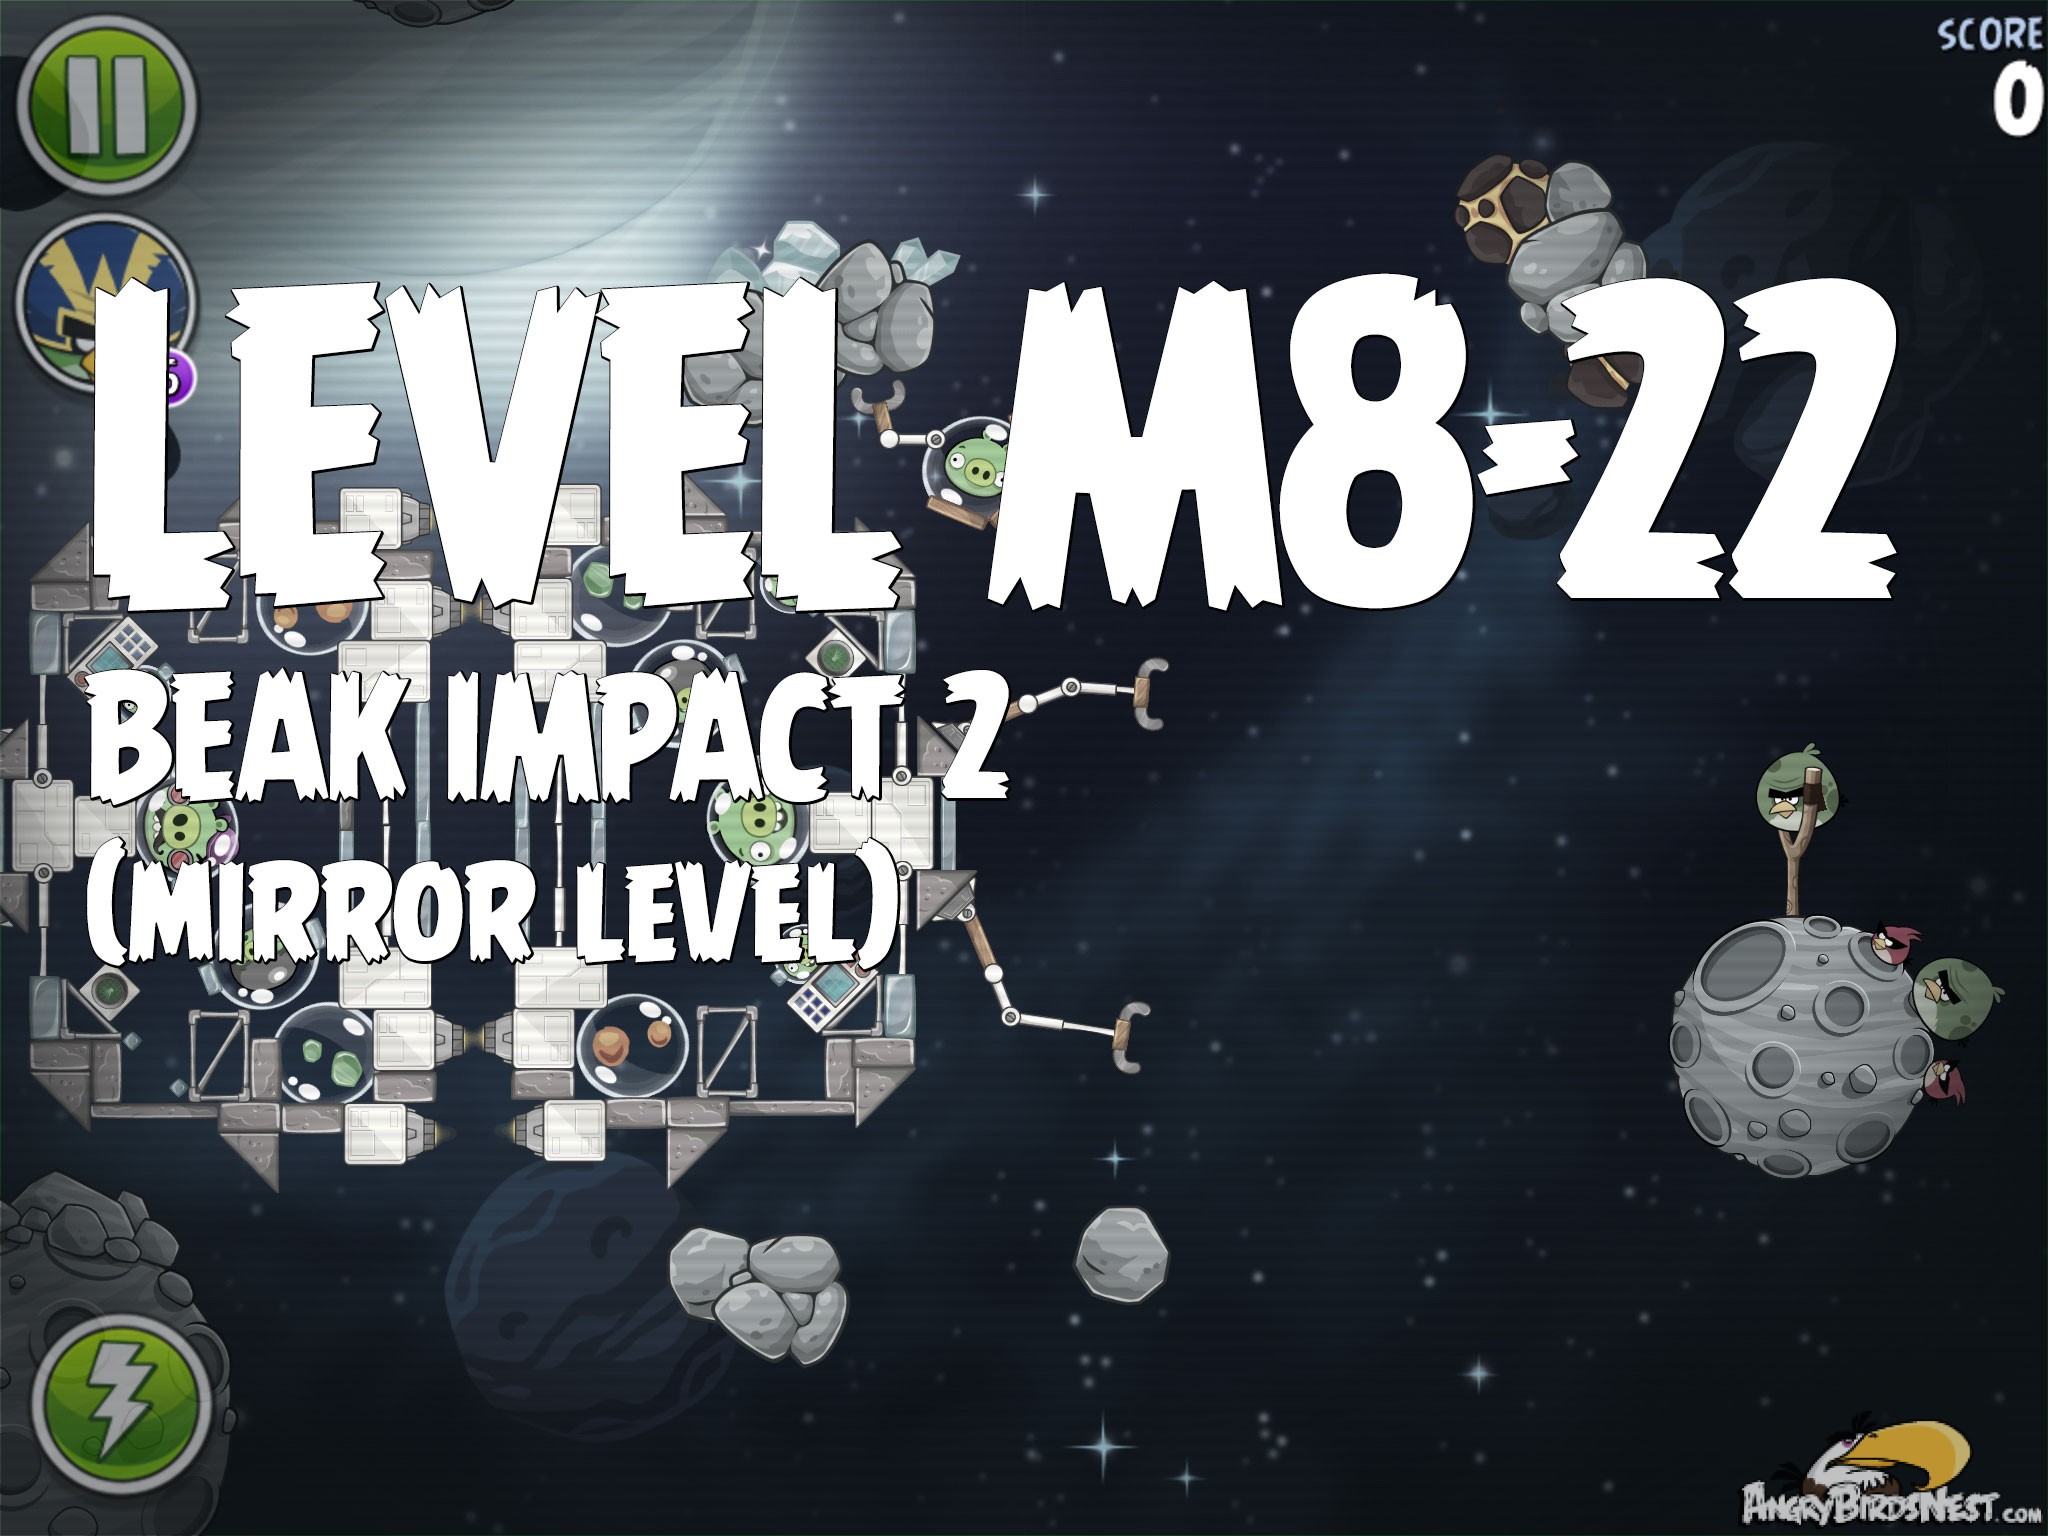 Angry Birds Space Beak Impact 2 Level M8-22